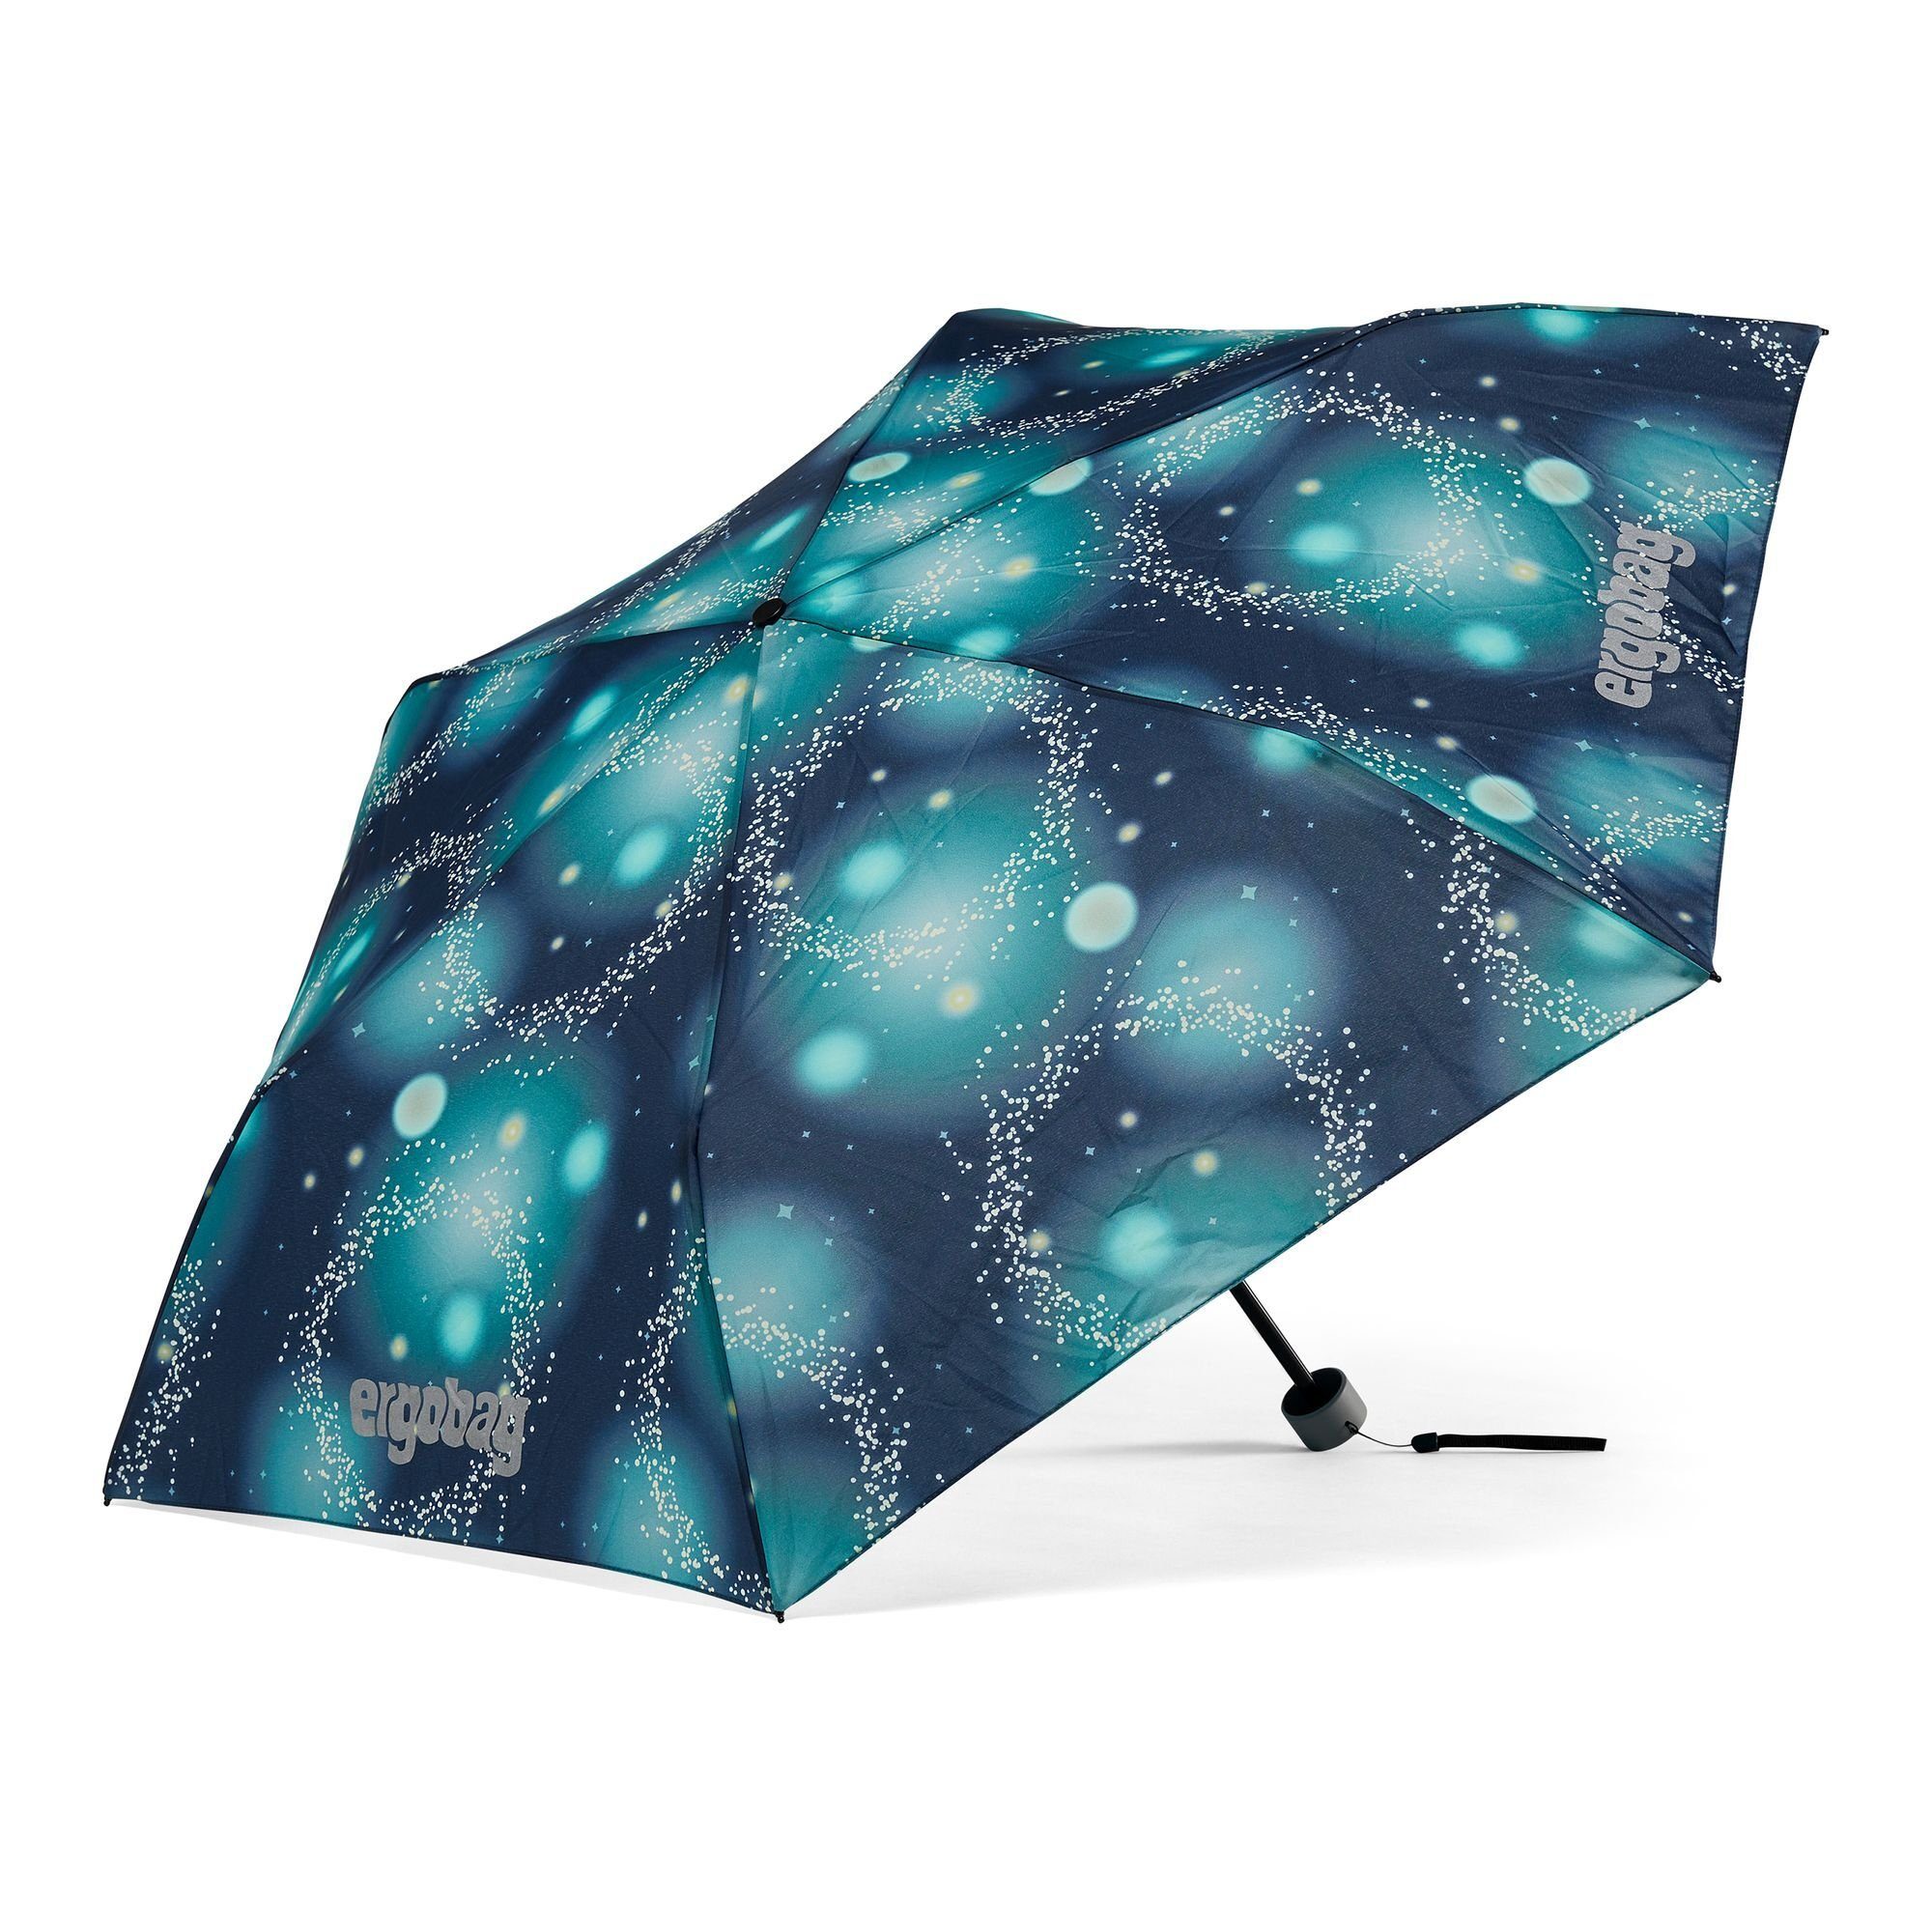 RaumfahrBär Zubehör Taschenregenschirm ergobag